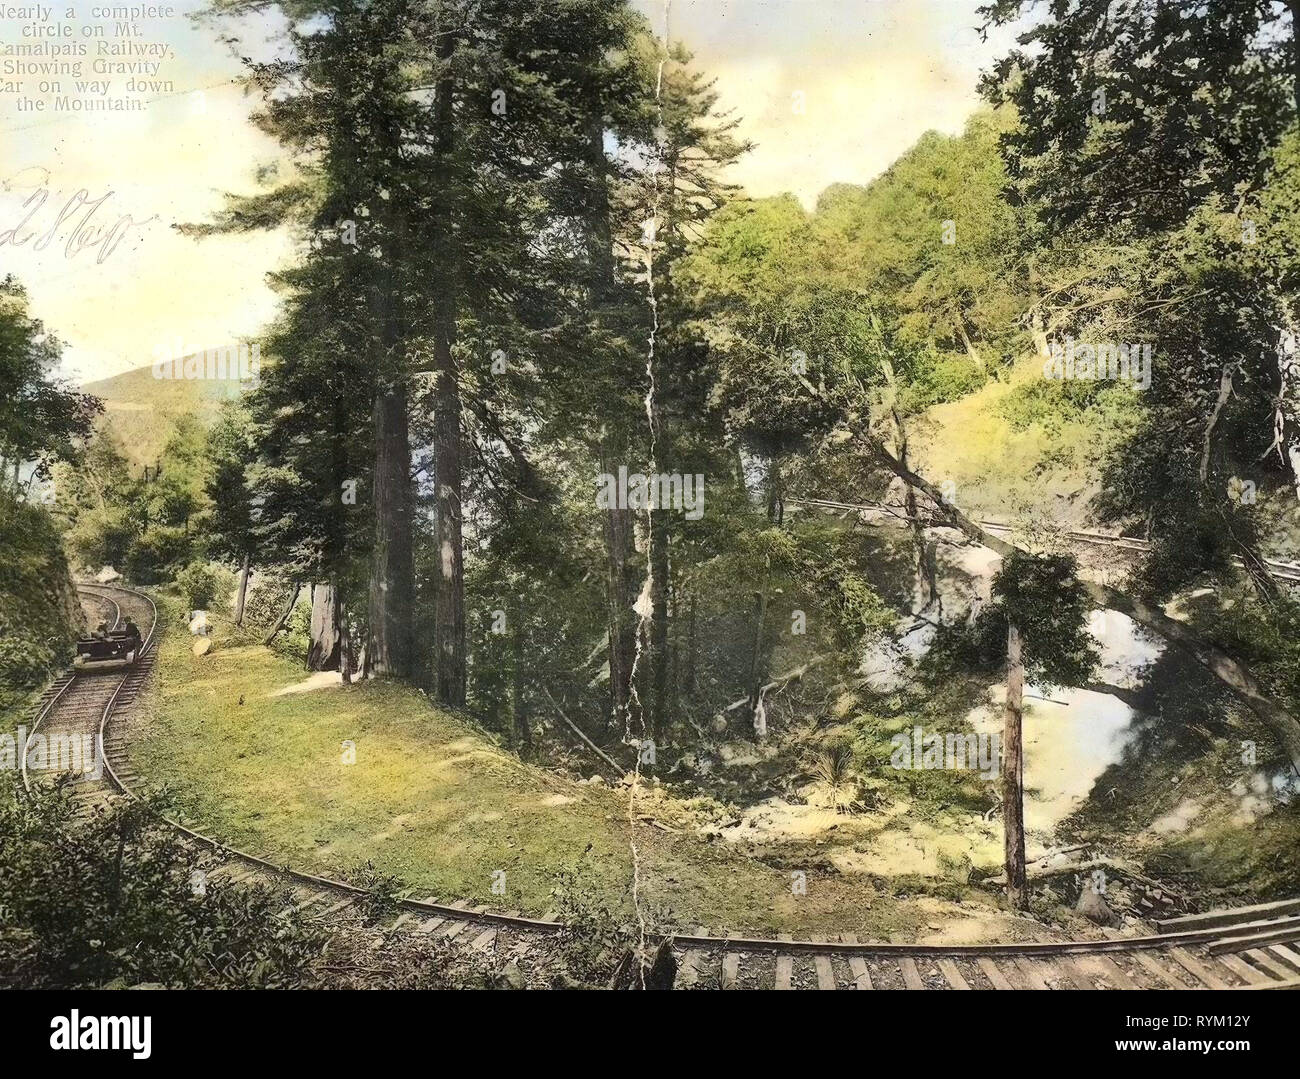 Rail tracks in Washington (state), Mount Tamalpais and Muir Woods Railway, Rail transport in Washington (state), 1906, Washington (state), Mt. Tamalpais, nearly a complete circle on Mt. Tamalpais Railway Stock Photo